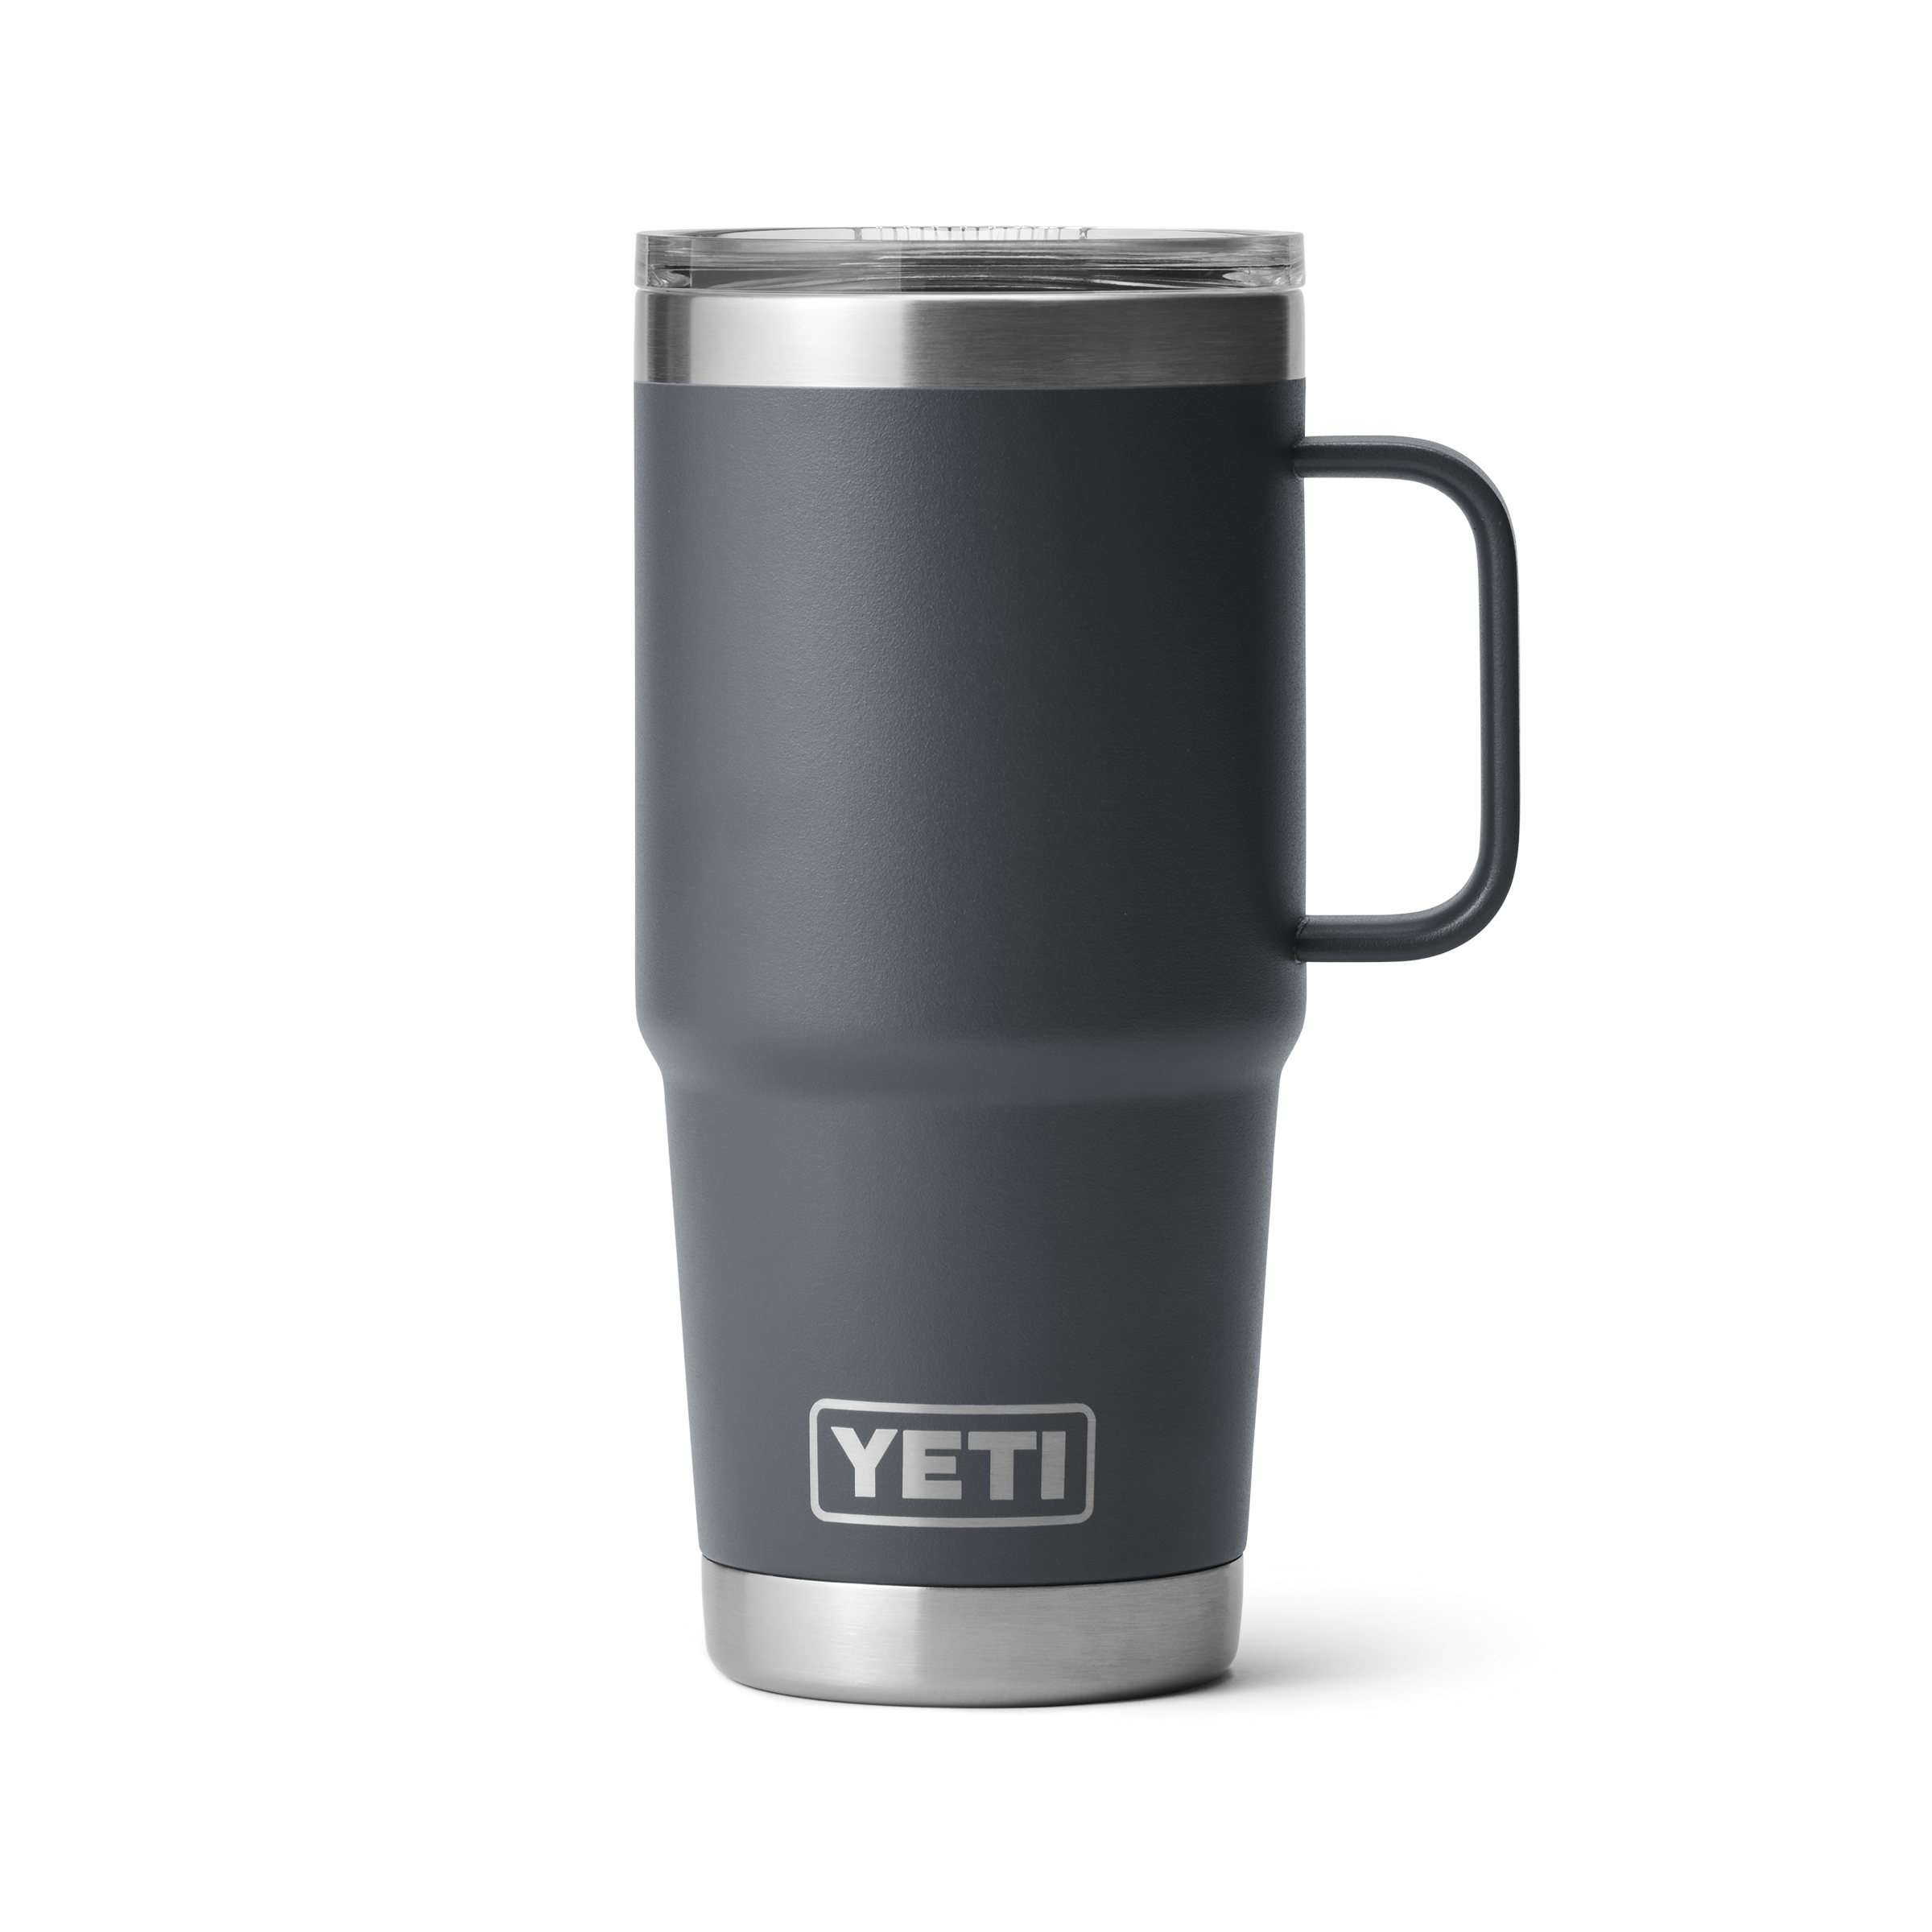 Yeti - Rambler 20 oz Travel Mug - Charcoal